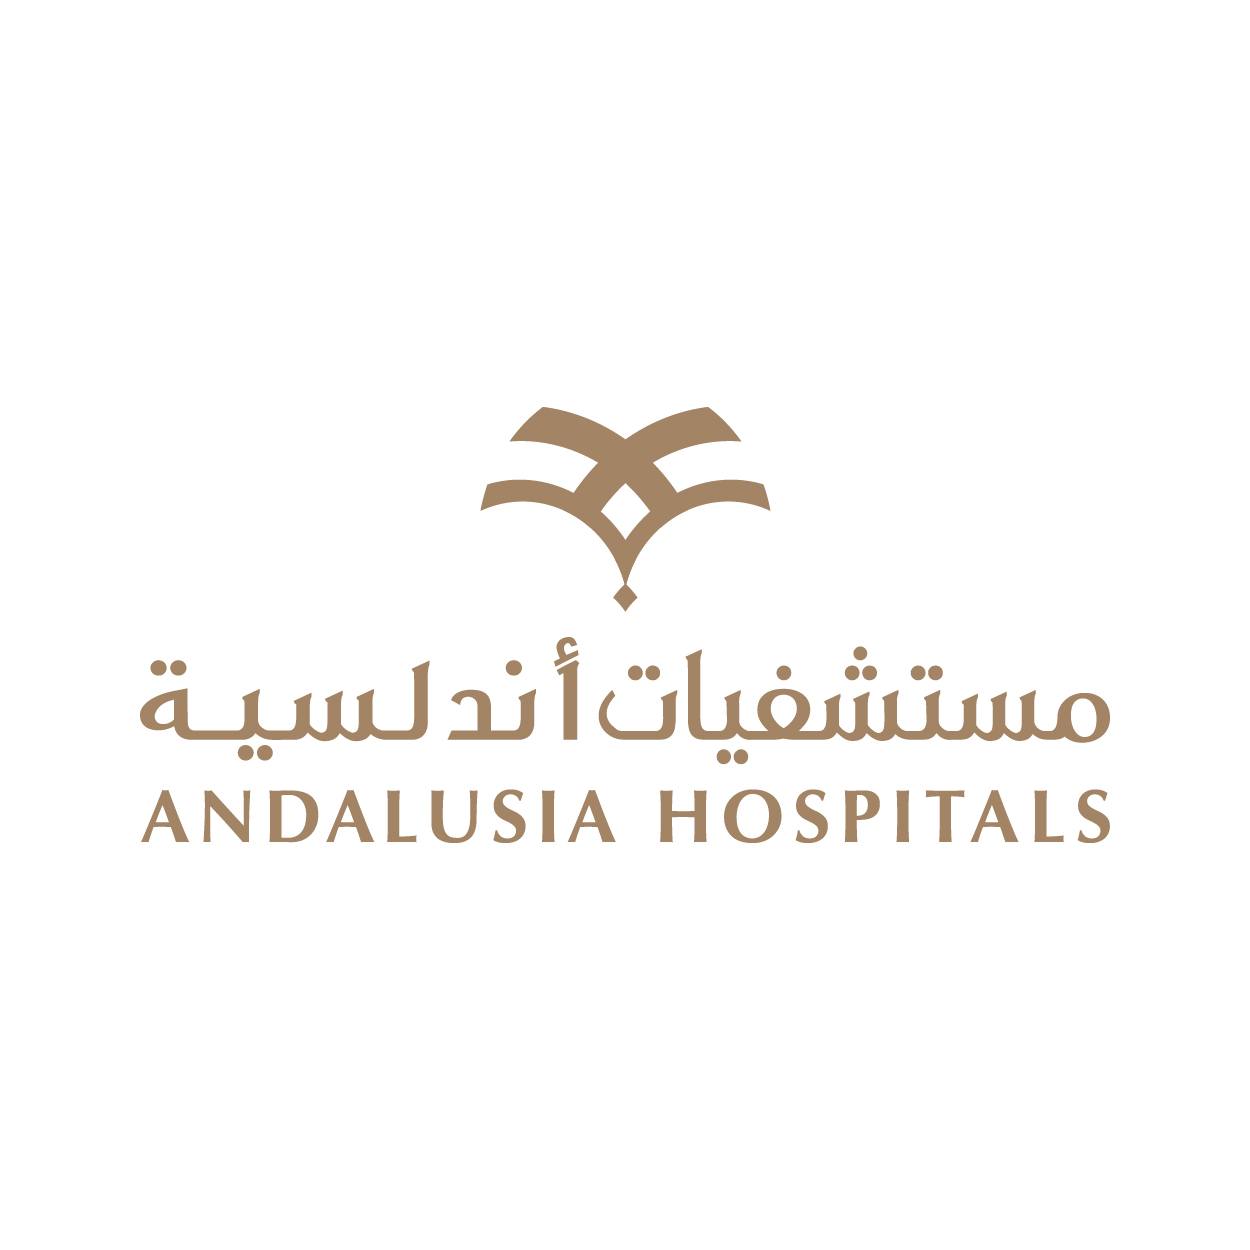 Andalusia Hospitals